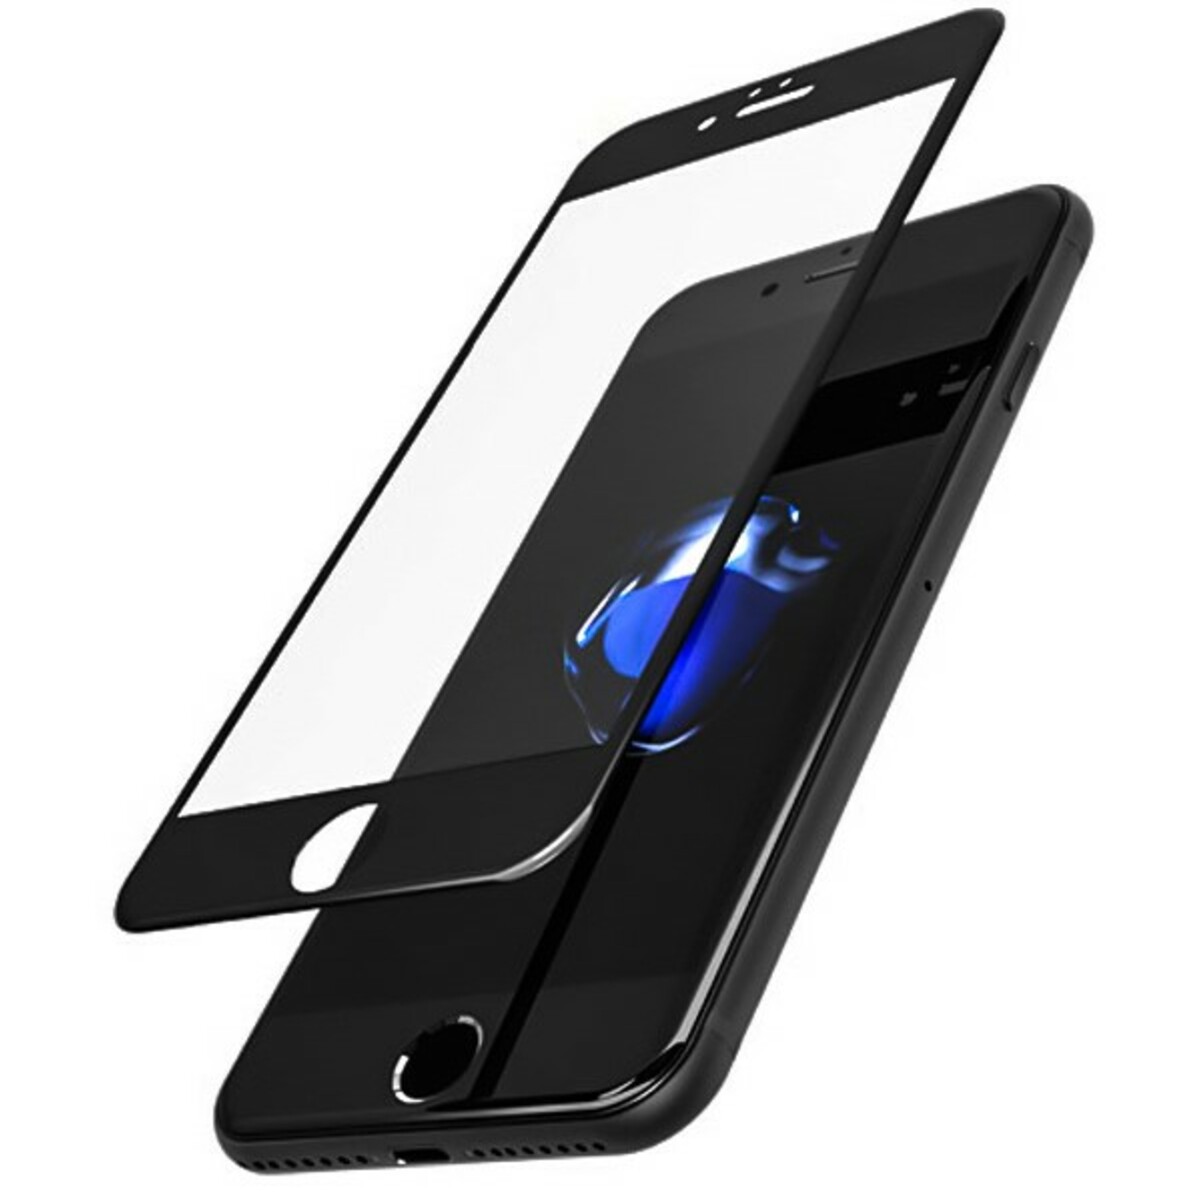 Защитное стекло Devia Jade Full Screen Tempered Glass 0,26mm для смартфона iPhone 7 Plus / 8 Plus, черный